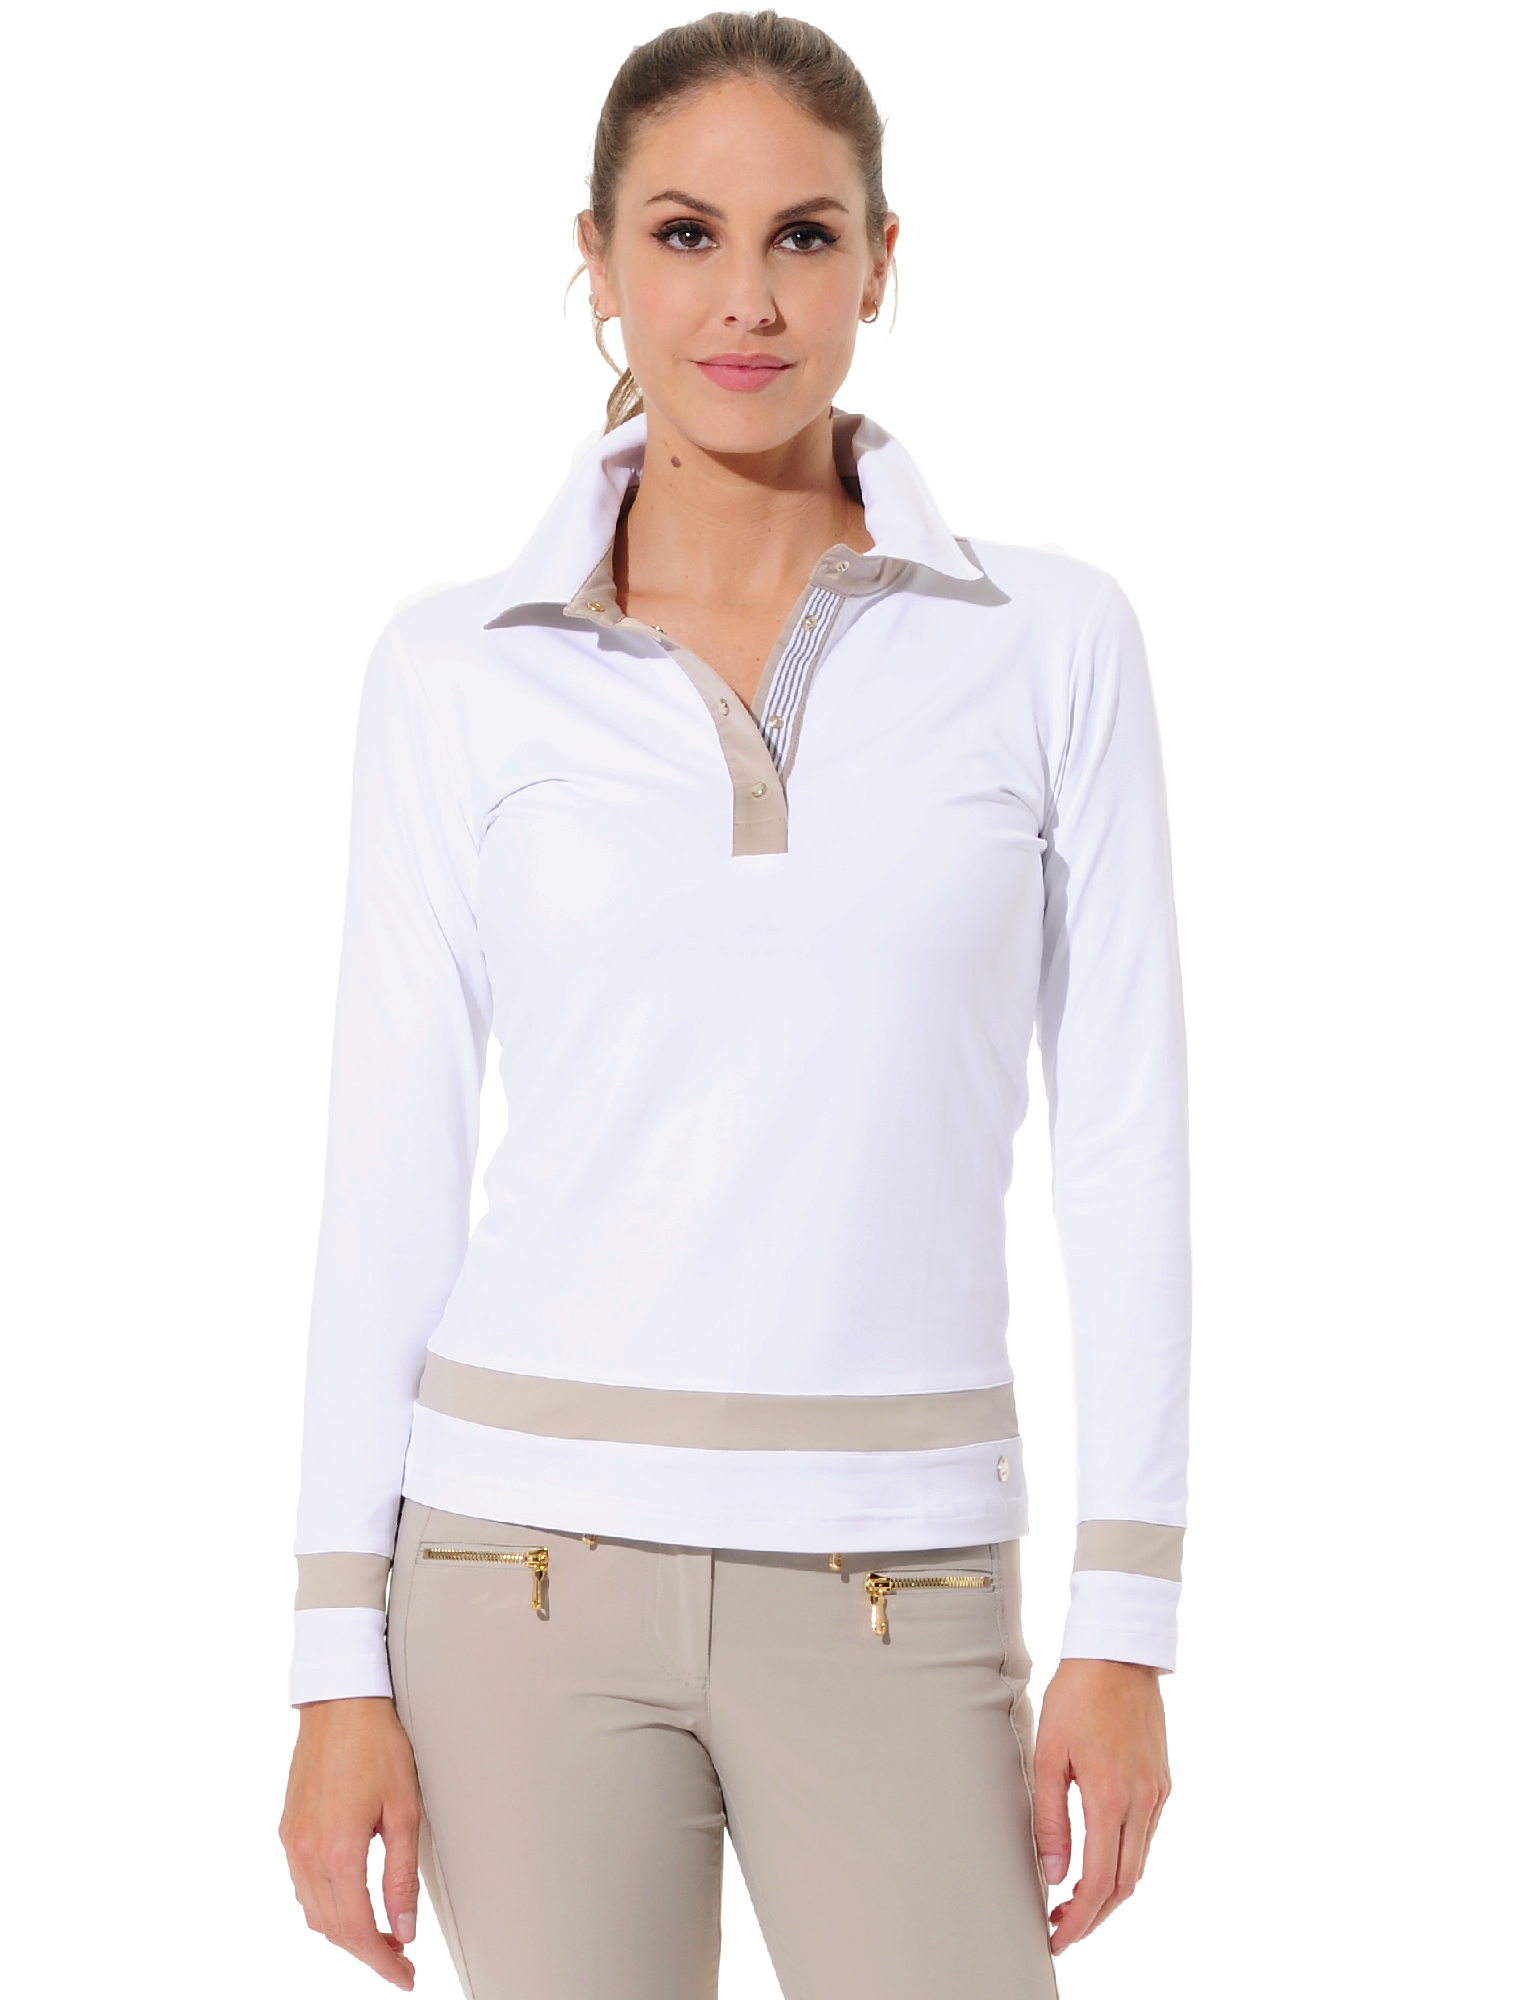 Jersey Golf Poloshirt white/light taupe